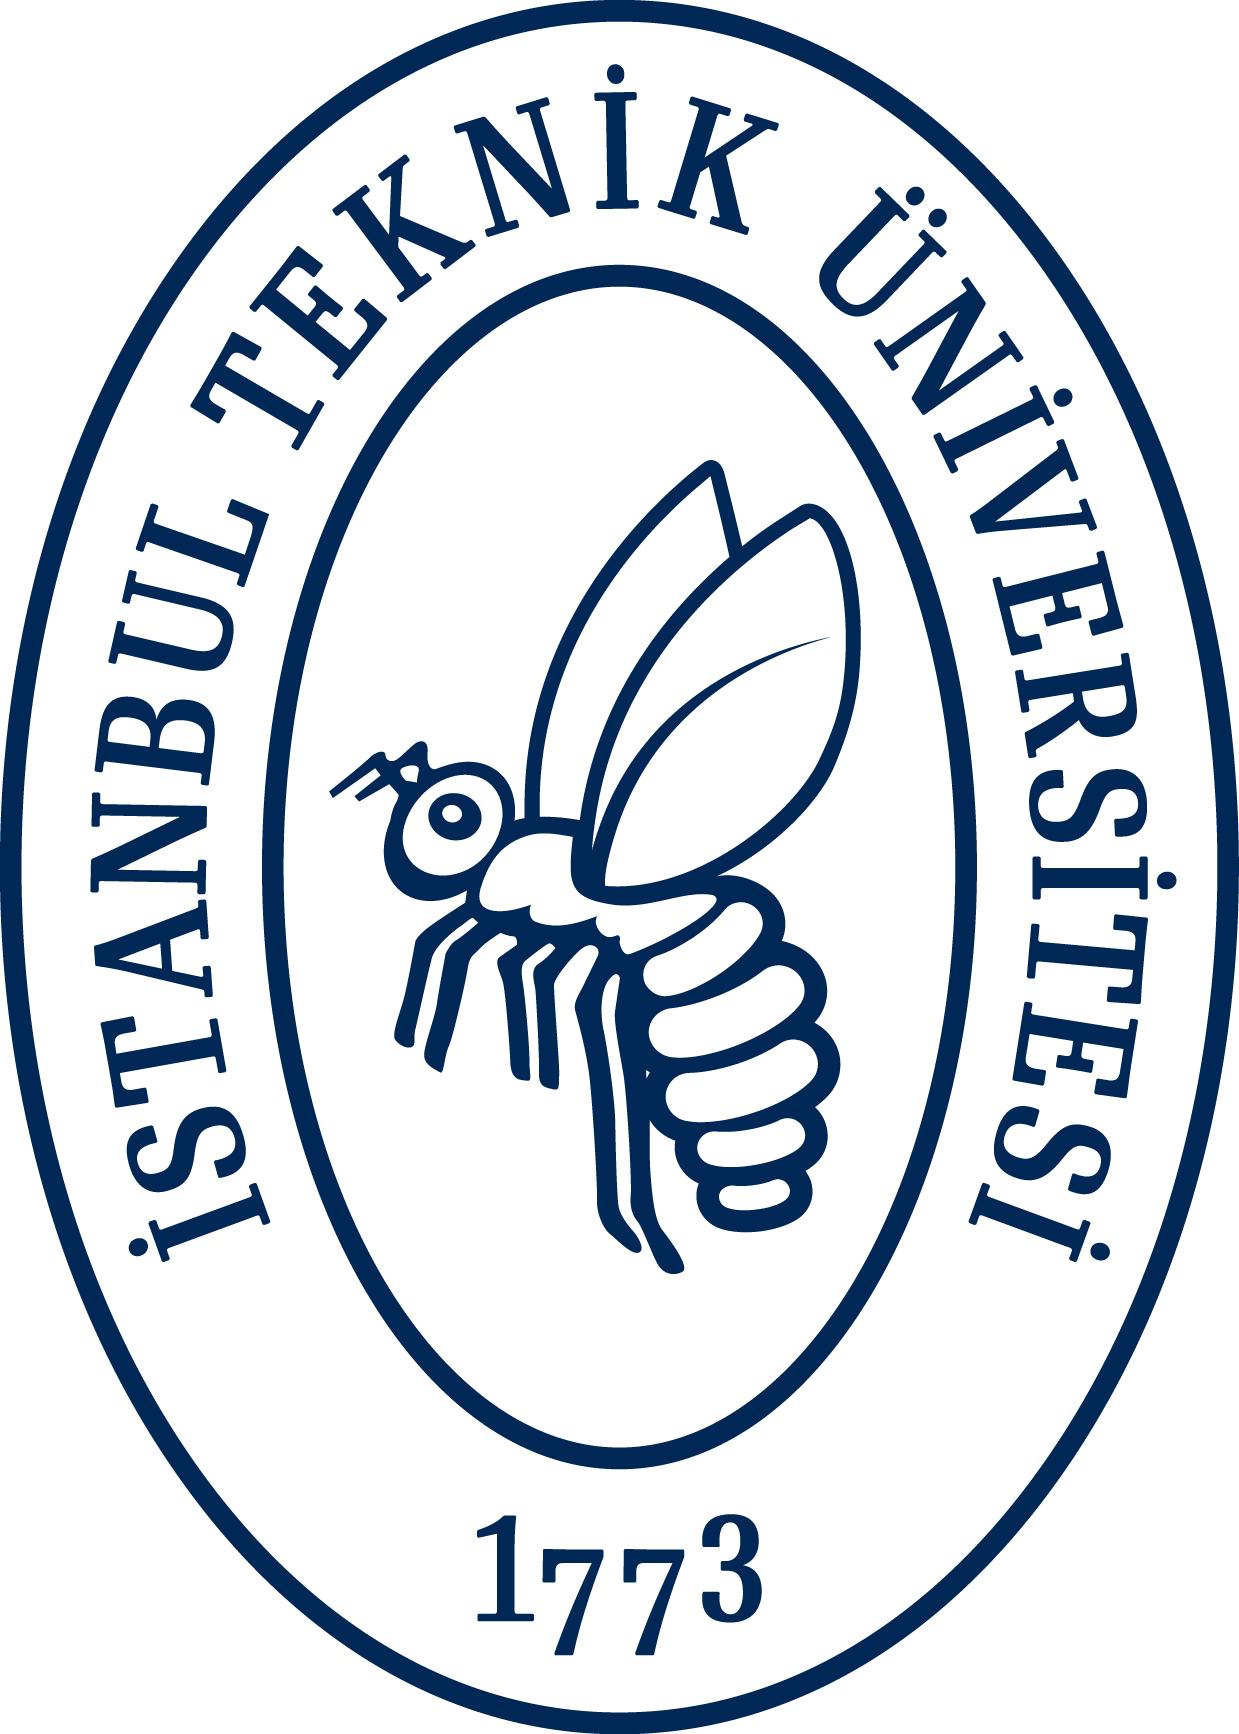 universite-logo